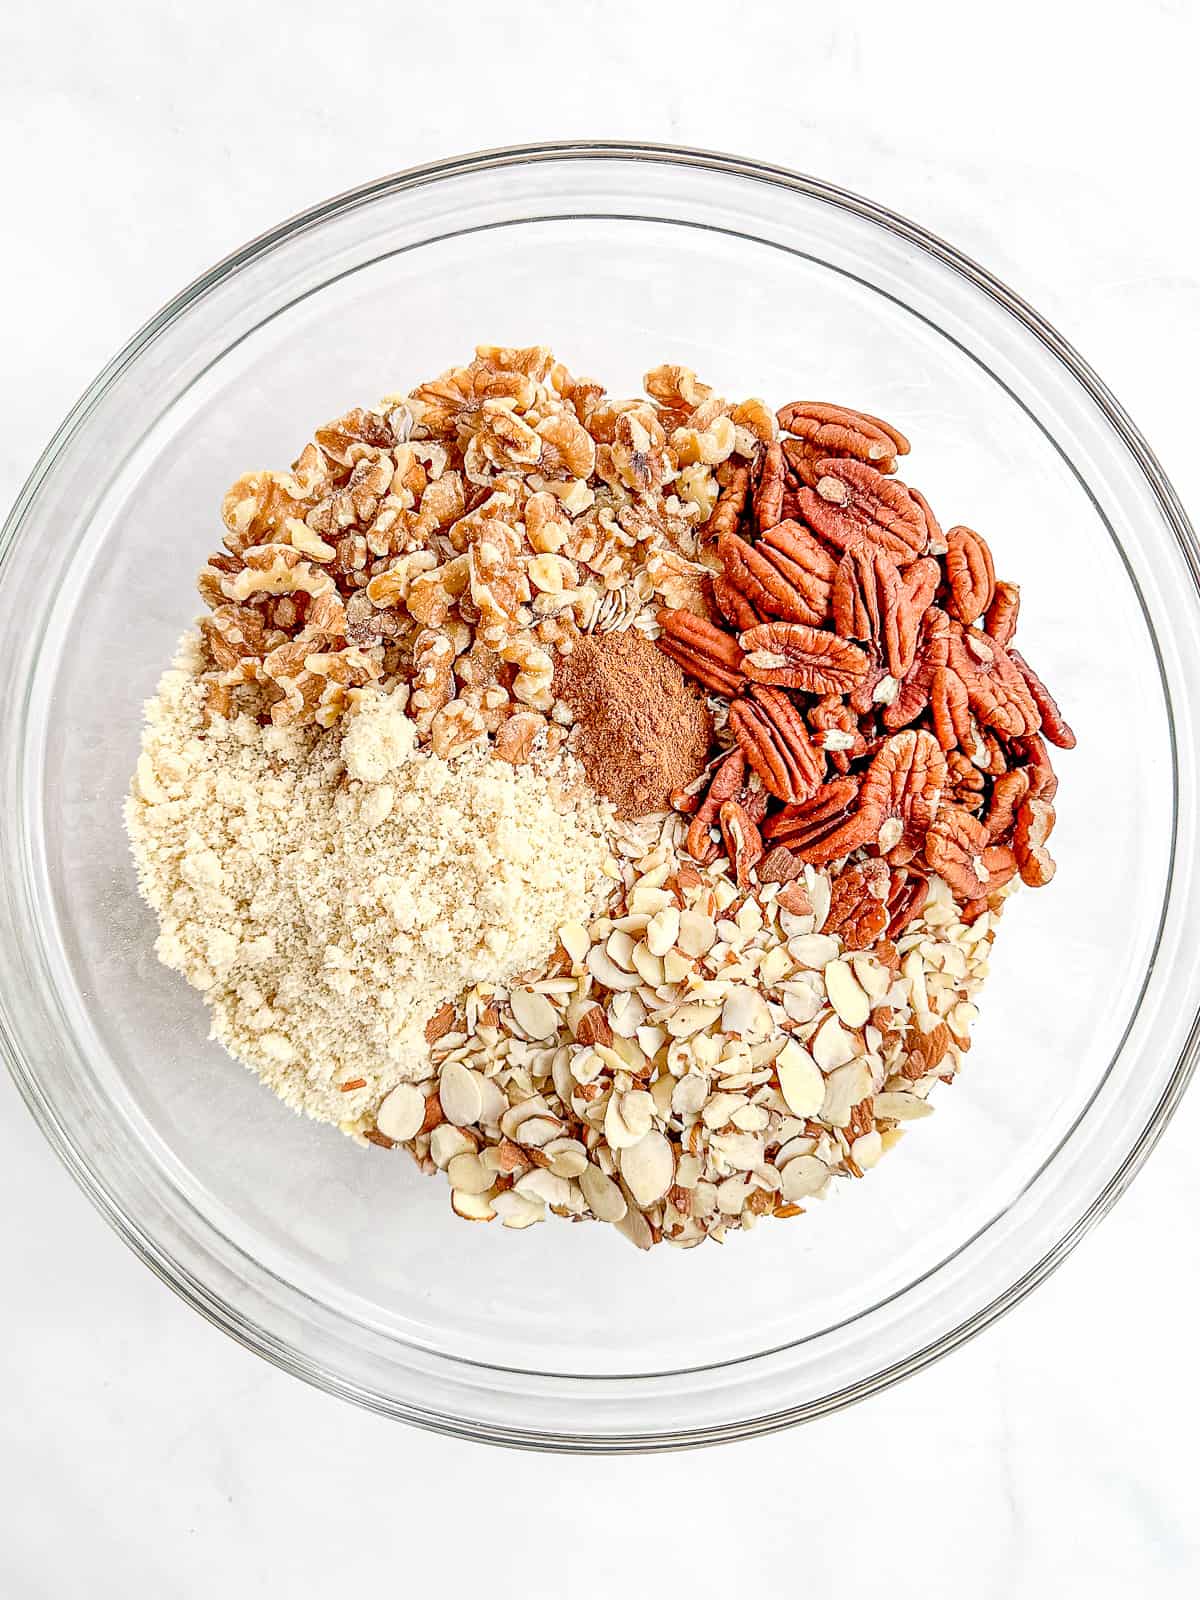 Ingredients to make granola in glass bowl.